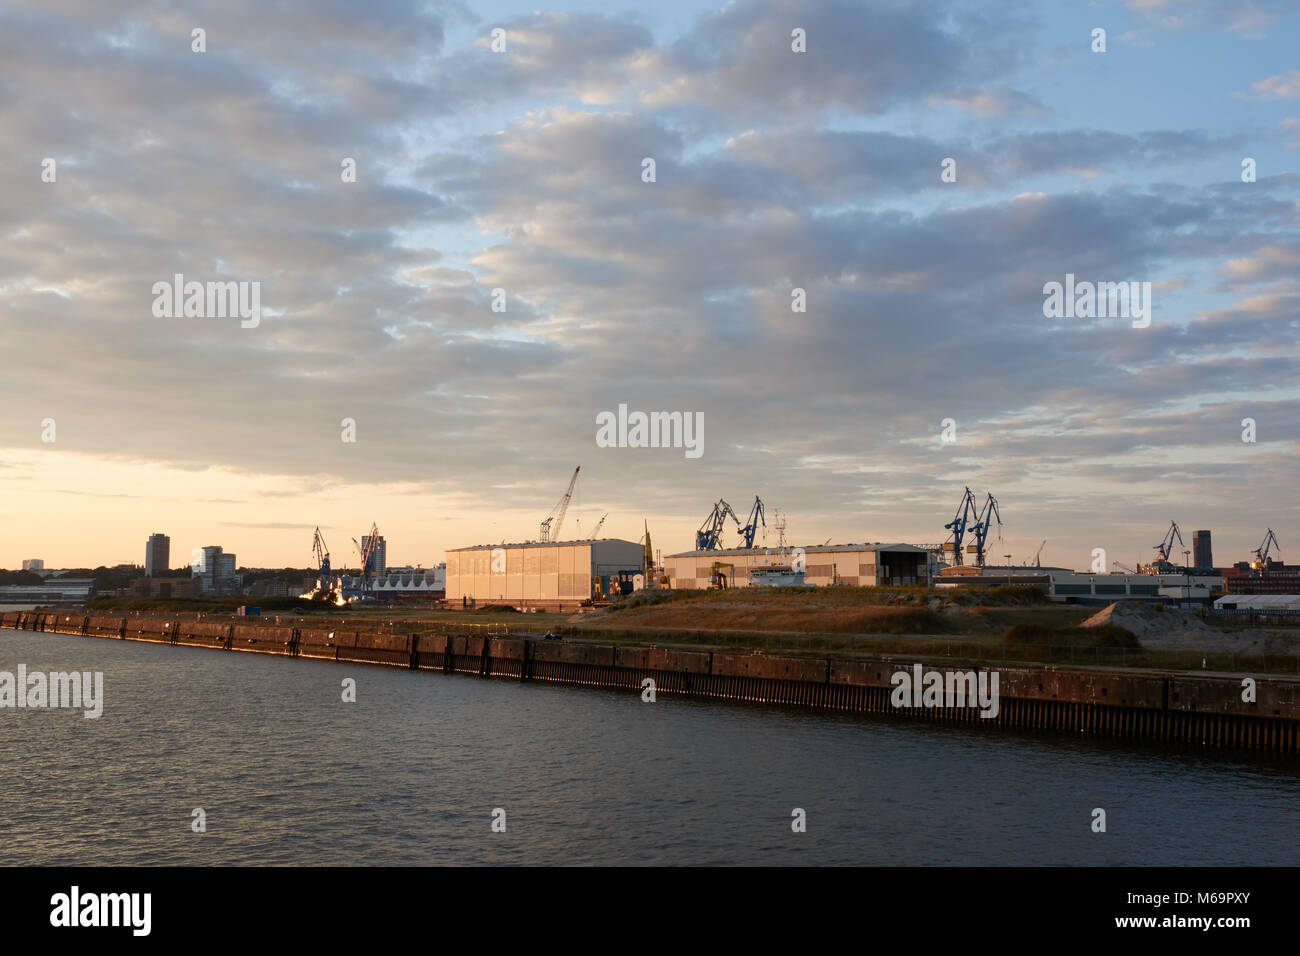 Seaport of Hamburg at sunset with beautiful evening sky. Stock Photo